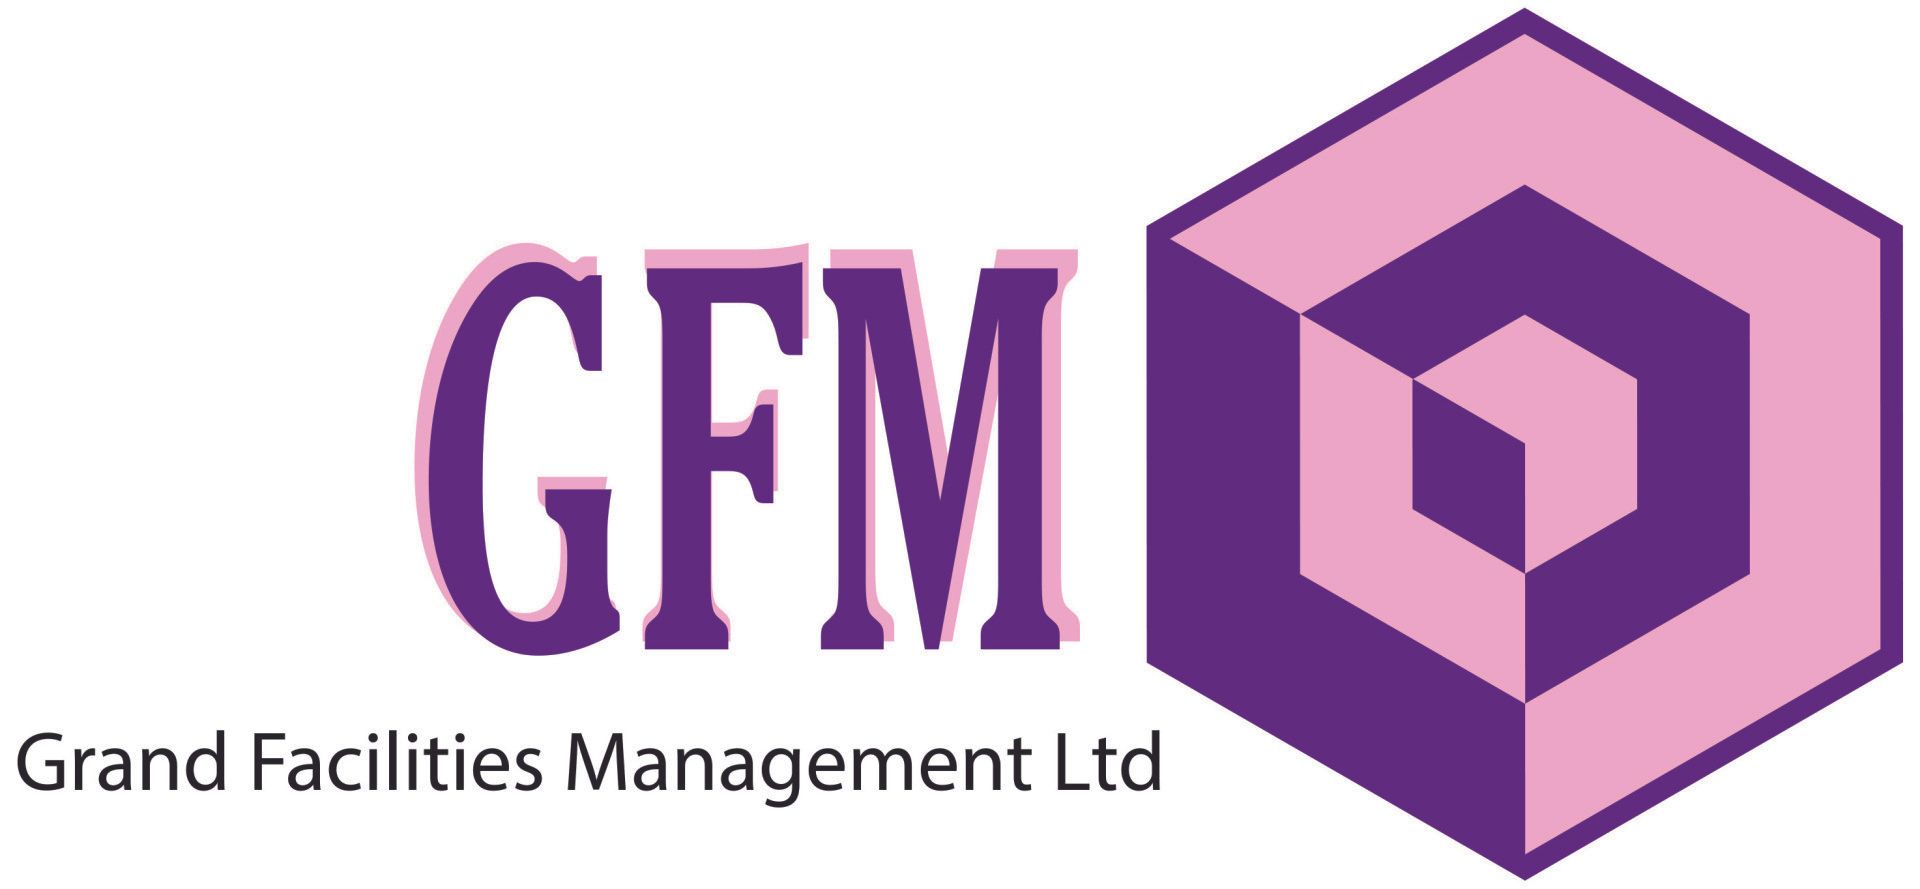 Grand Facilities Management Ltd Logo